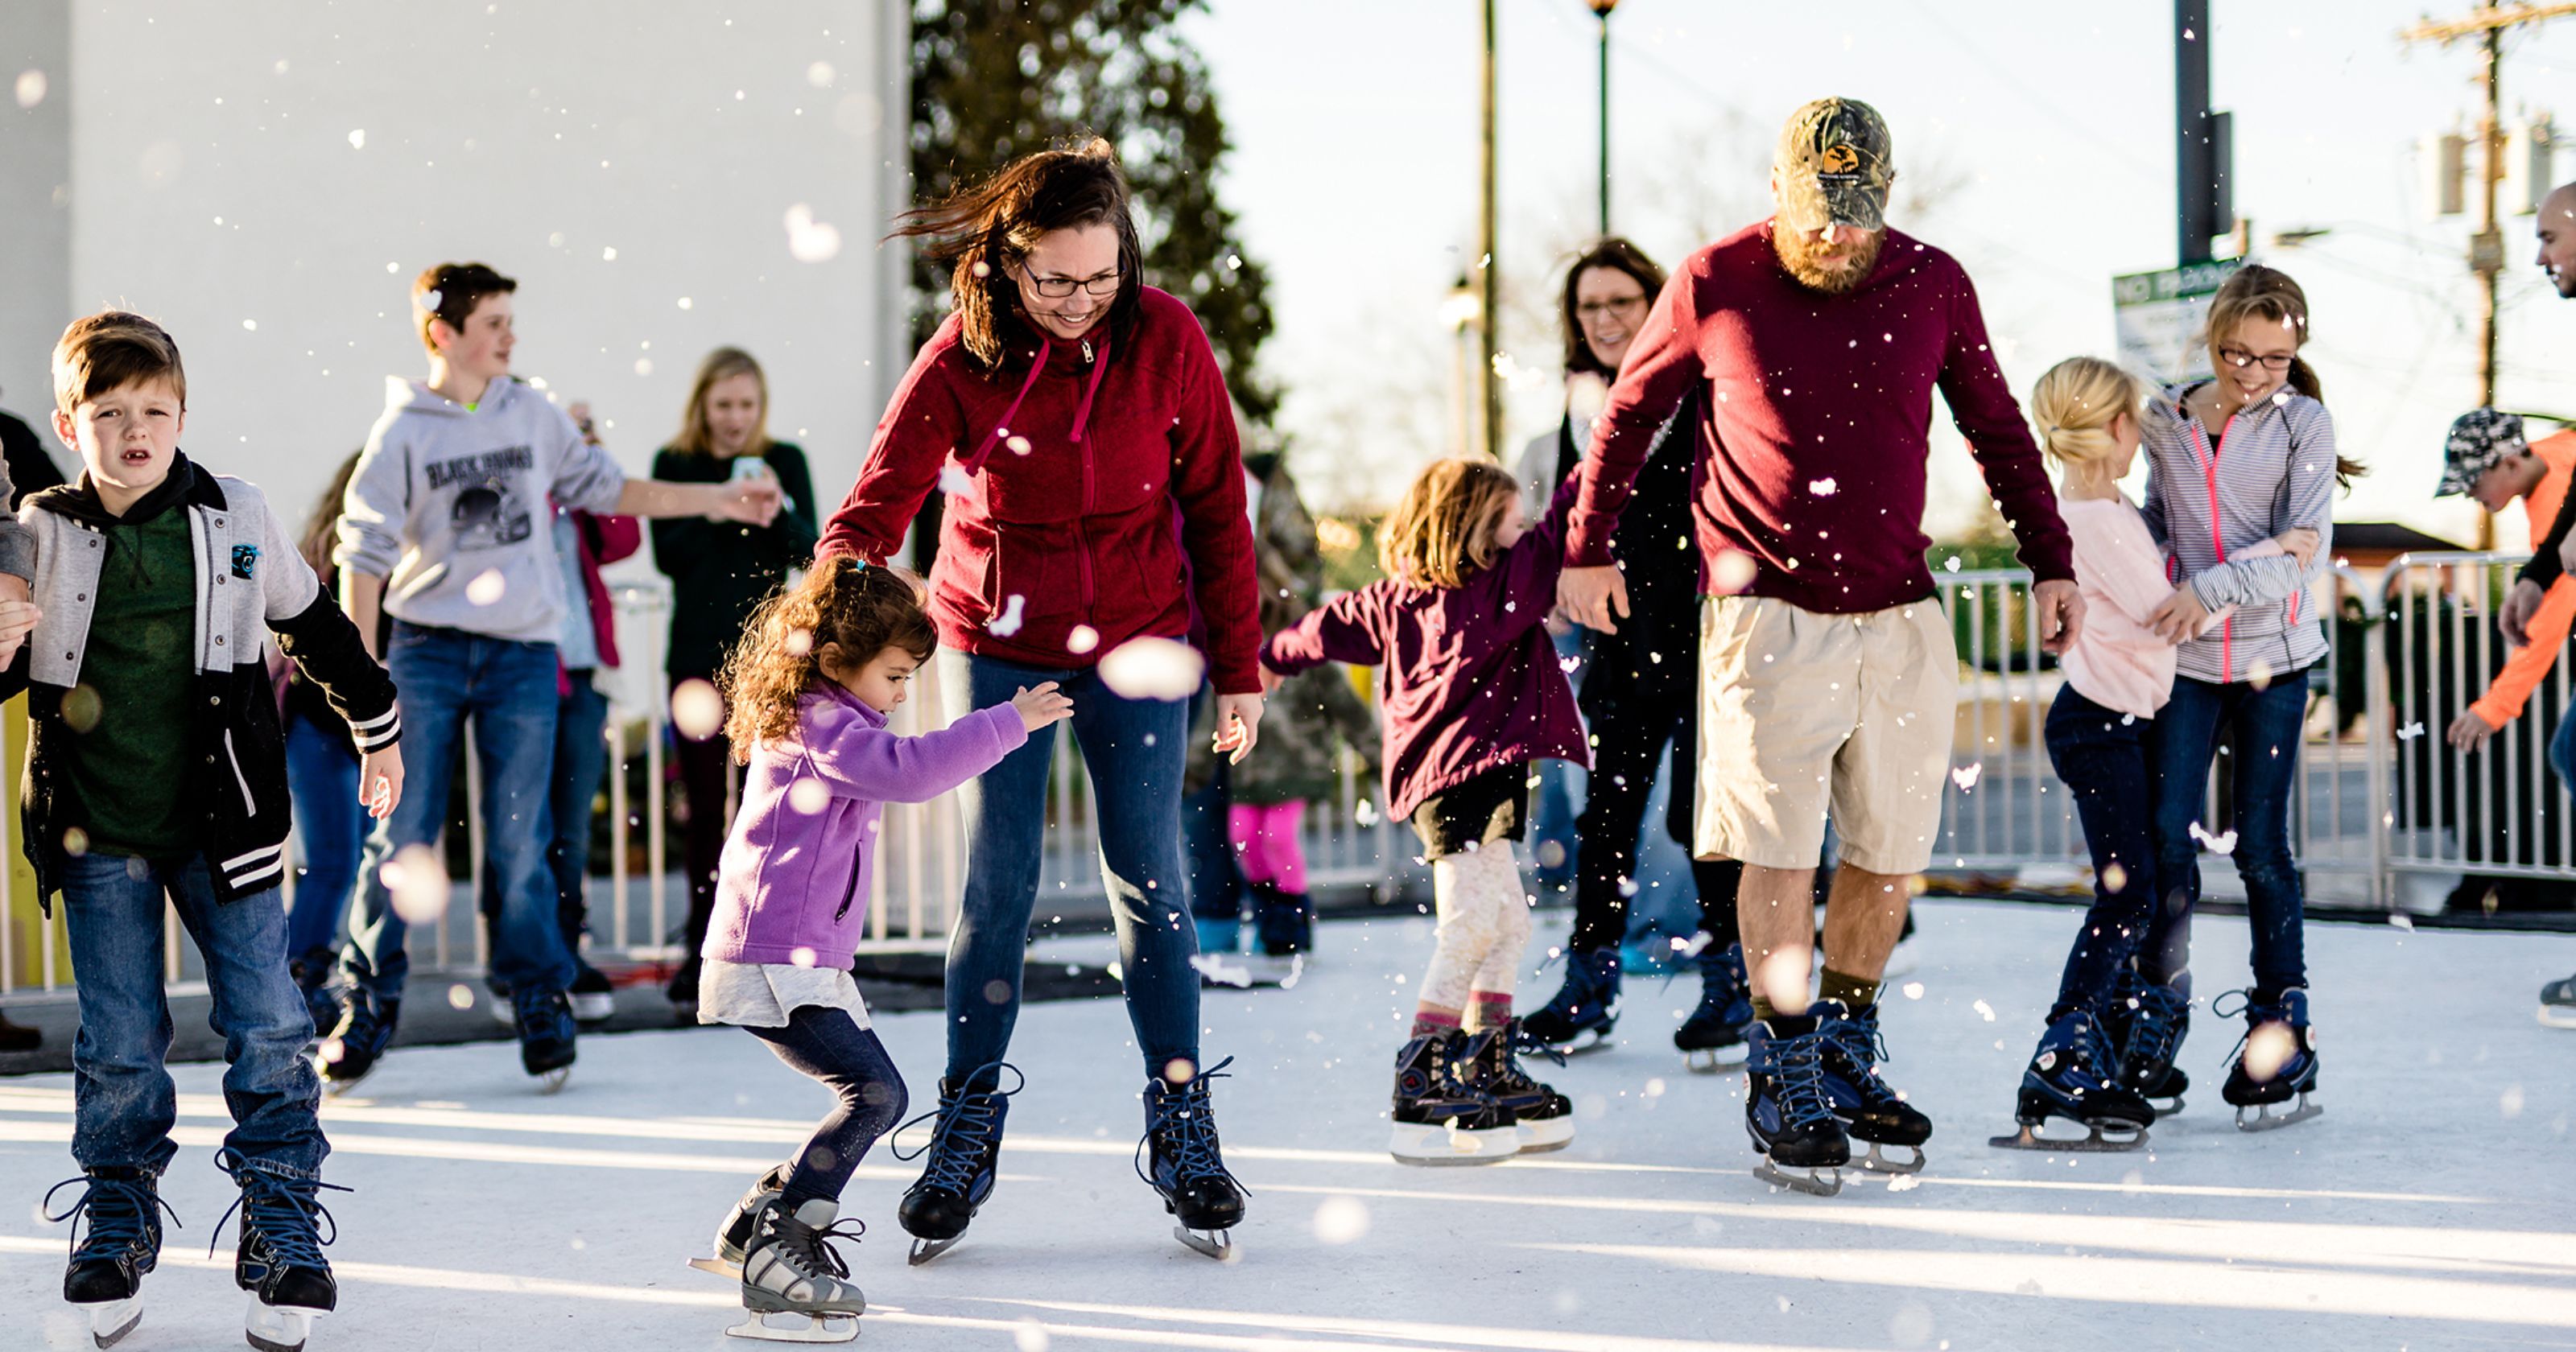 Go ice skating in downtown Hendersonville Dec. 19-Jan. 1